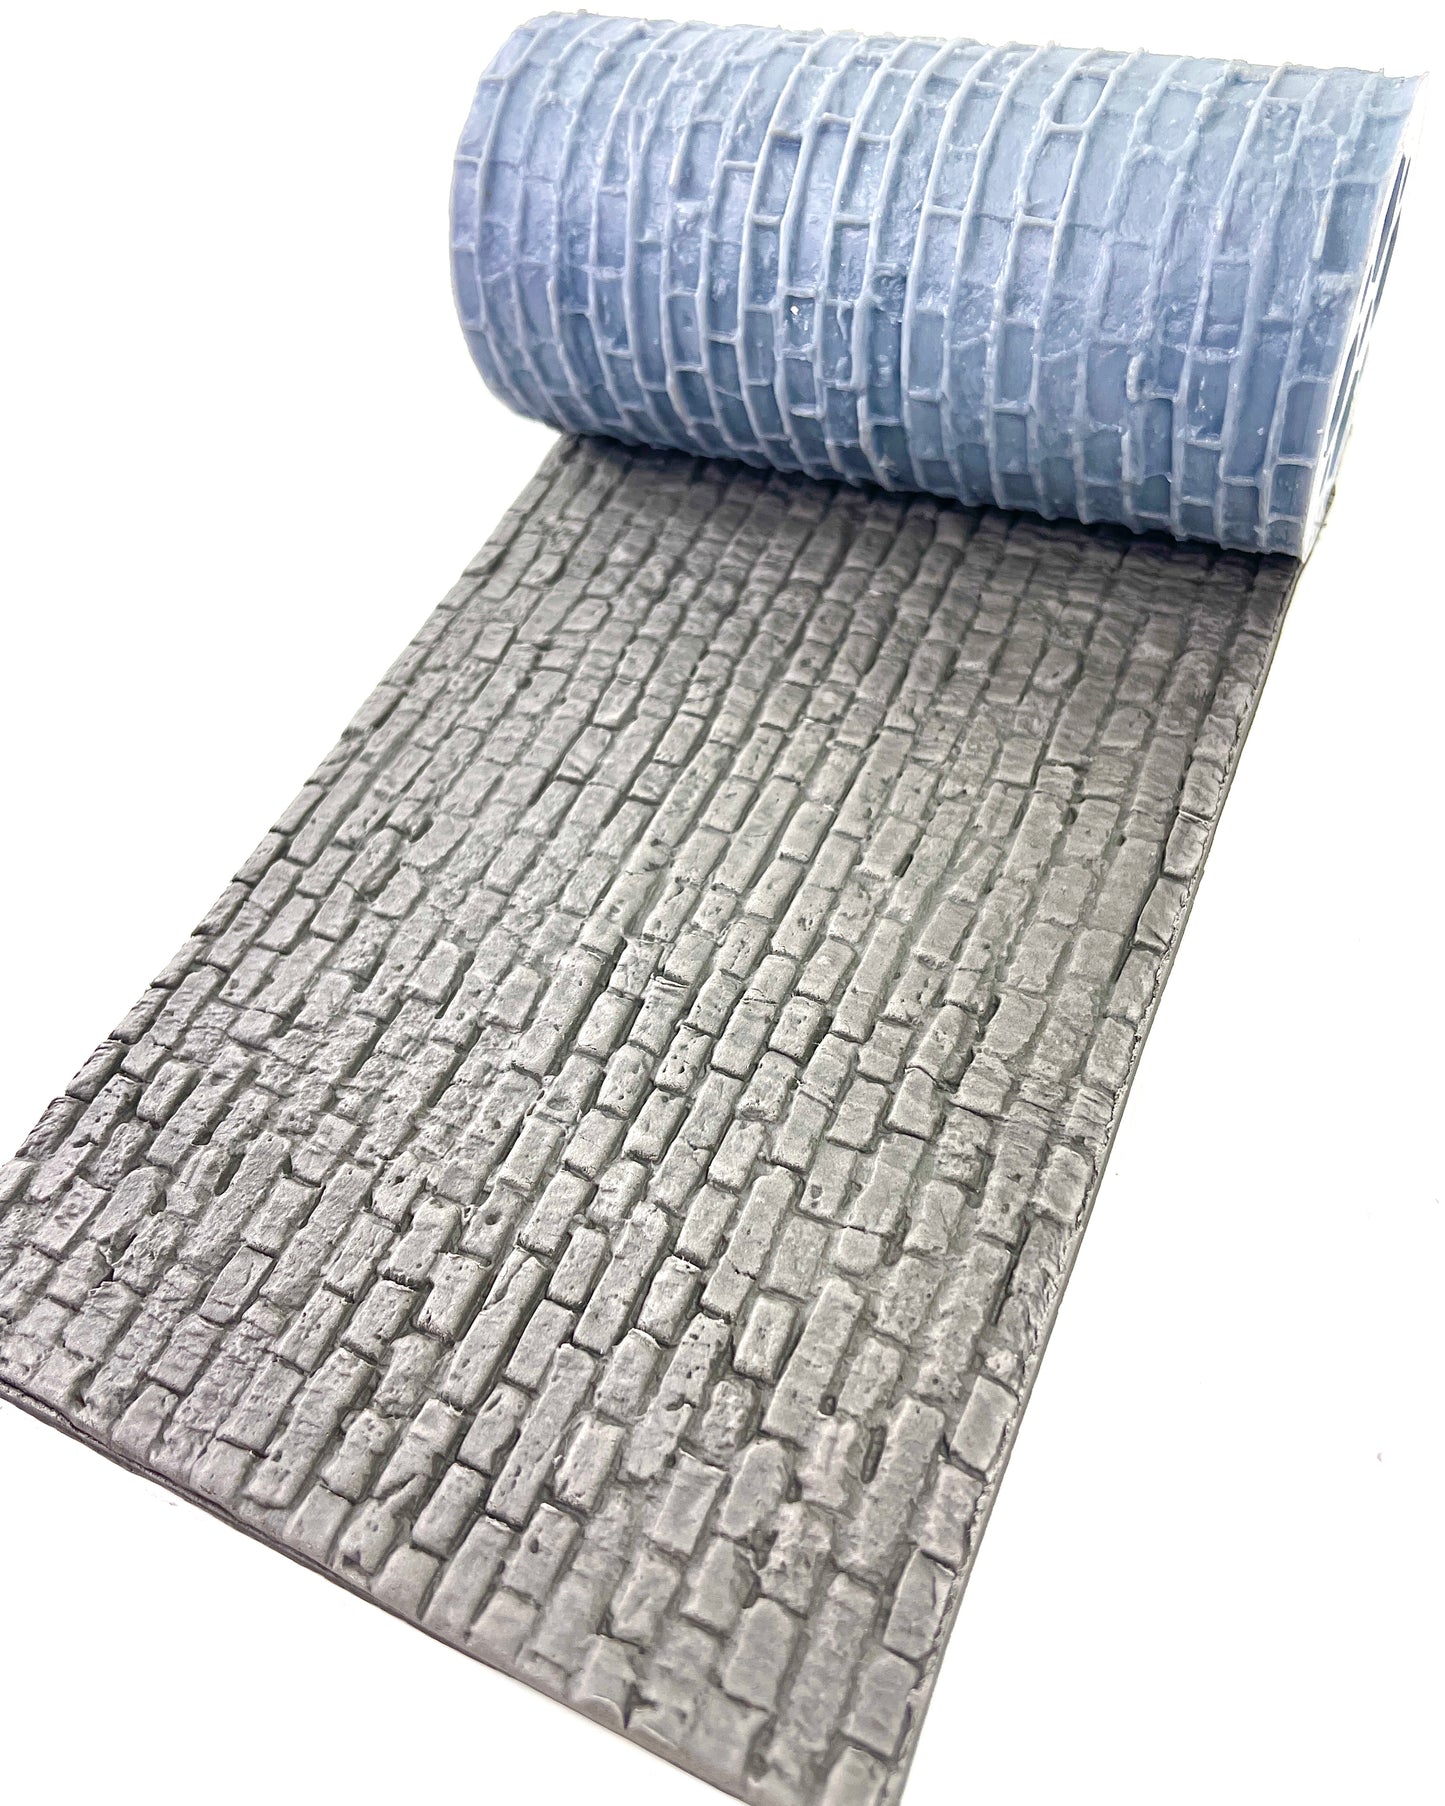 Texture Roller: Aged Brick